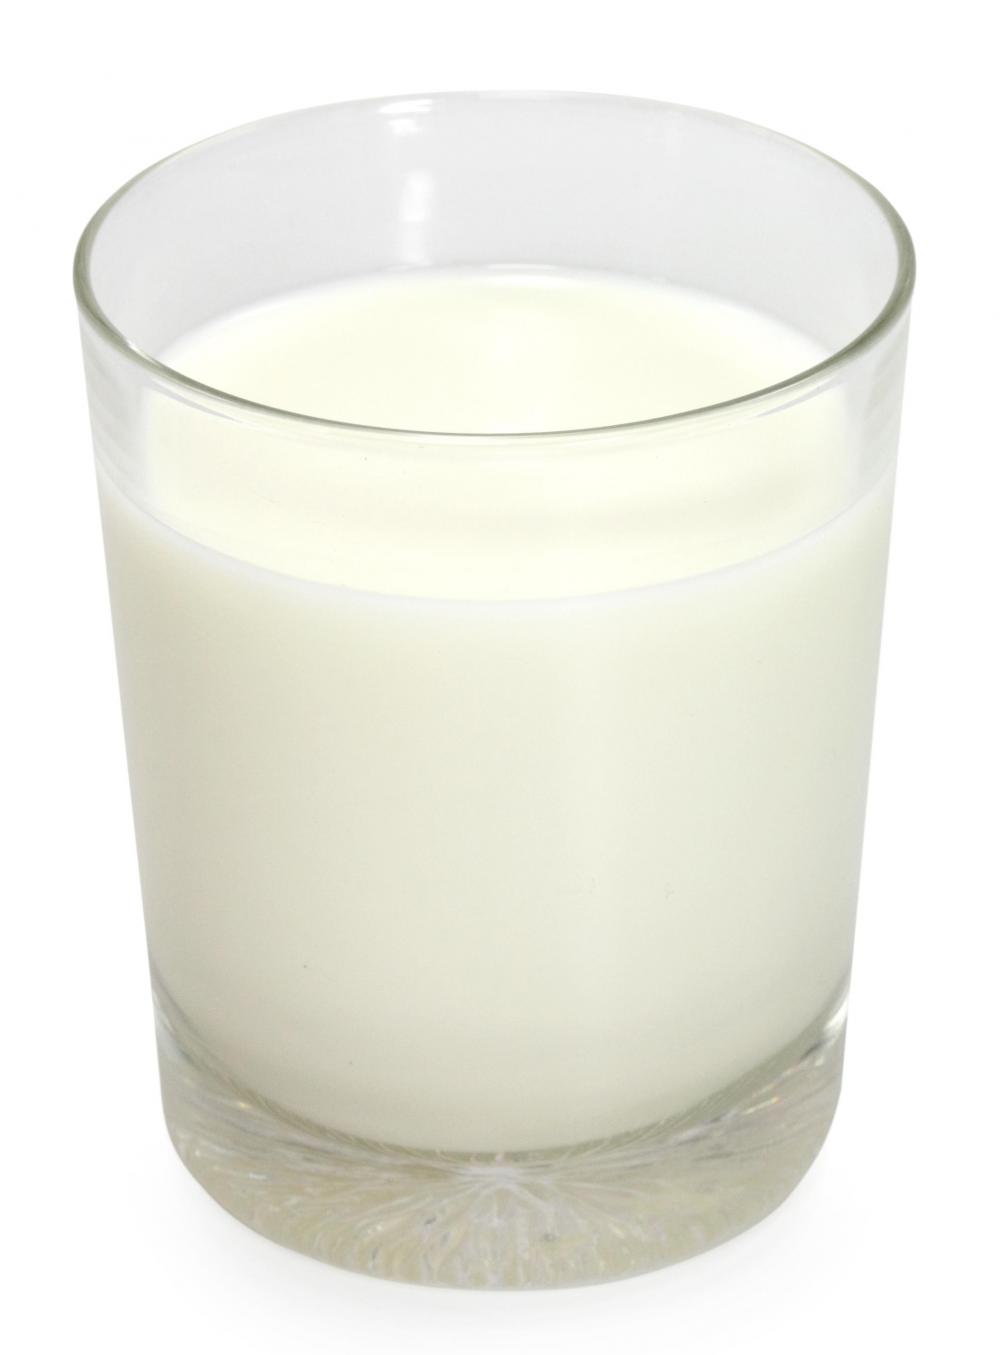 Eligibility for the school milk subsidy scheme   gov.uk